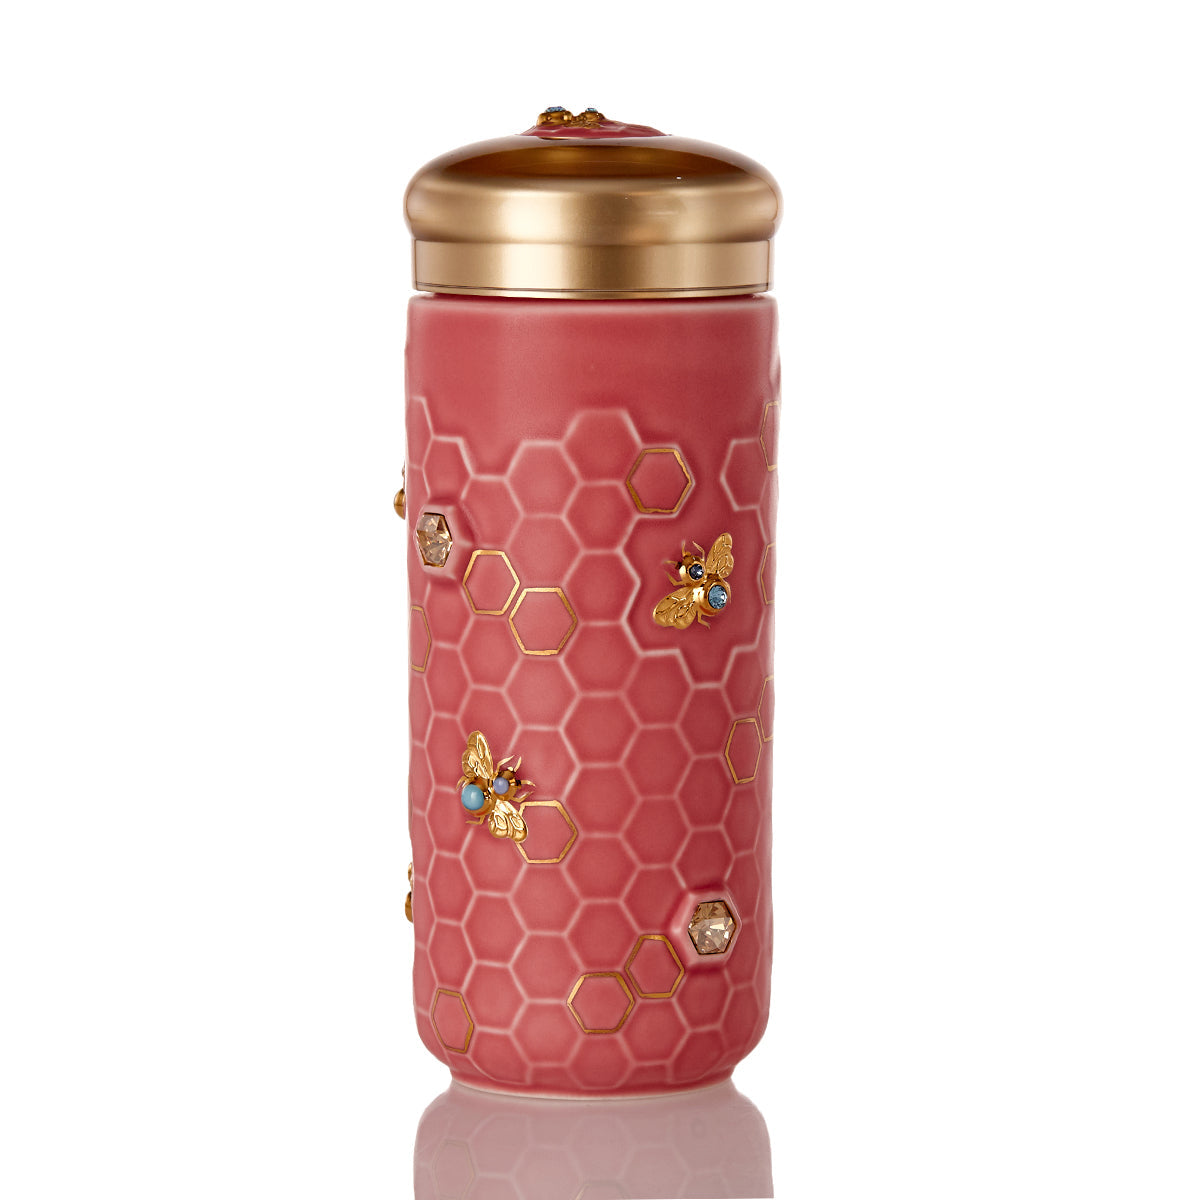 Honey Bee Travel Mug with Crystals, Ceramics 12.3 oz-2